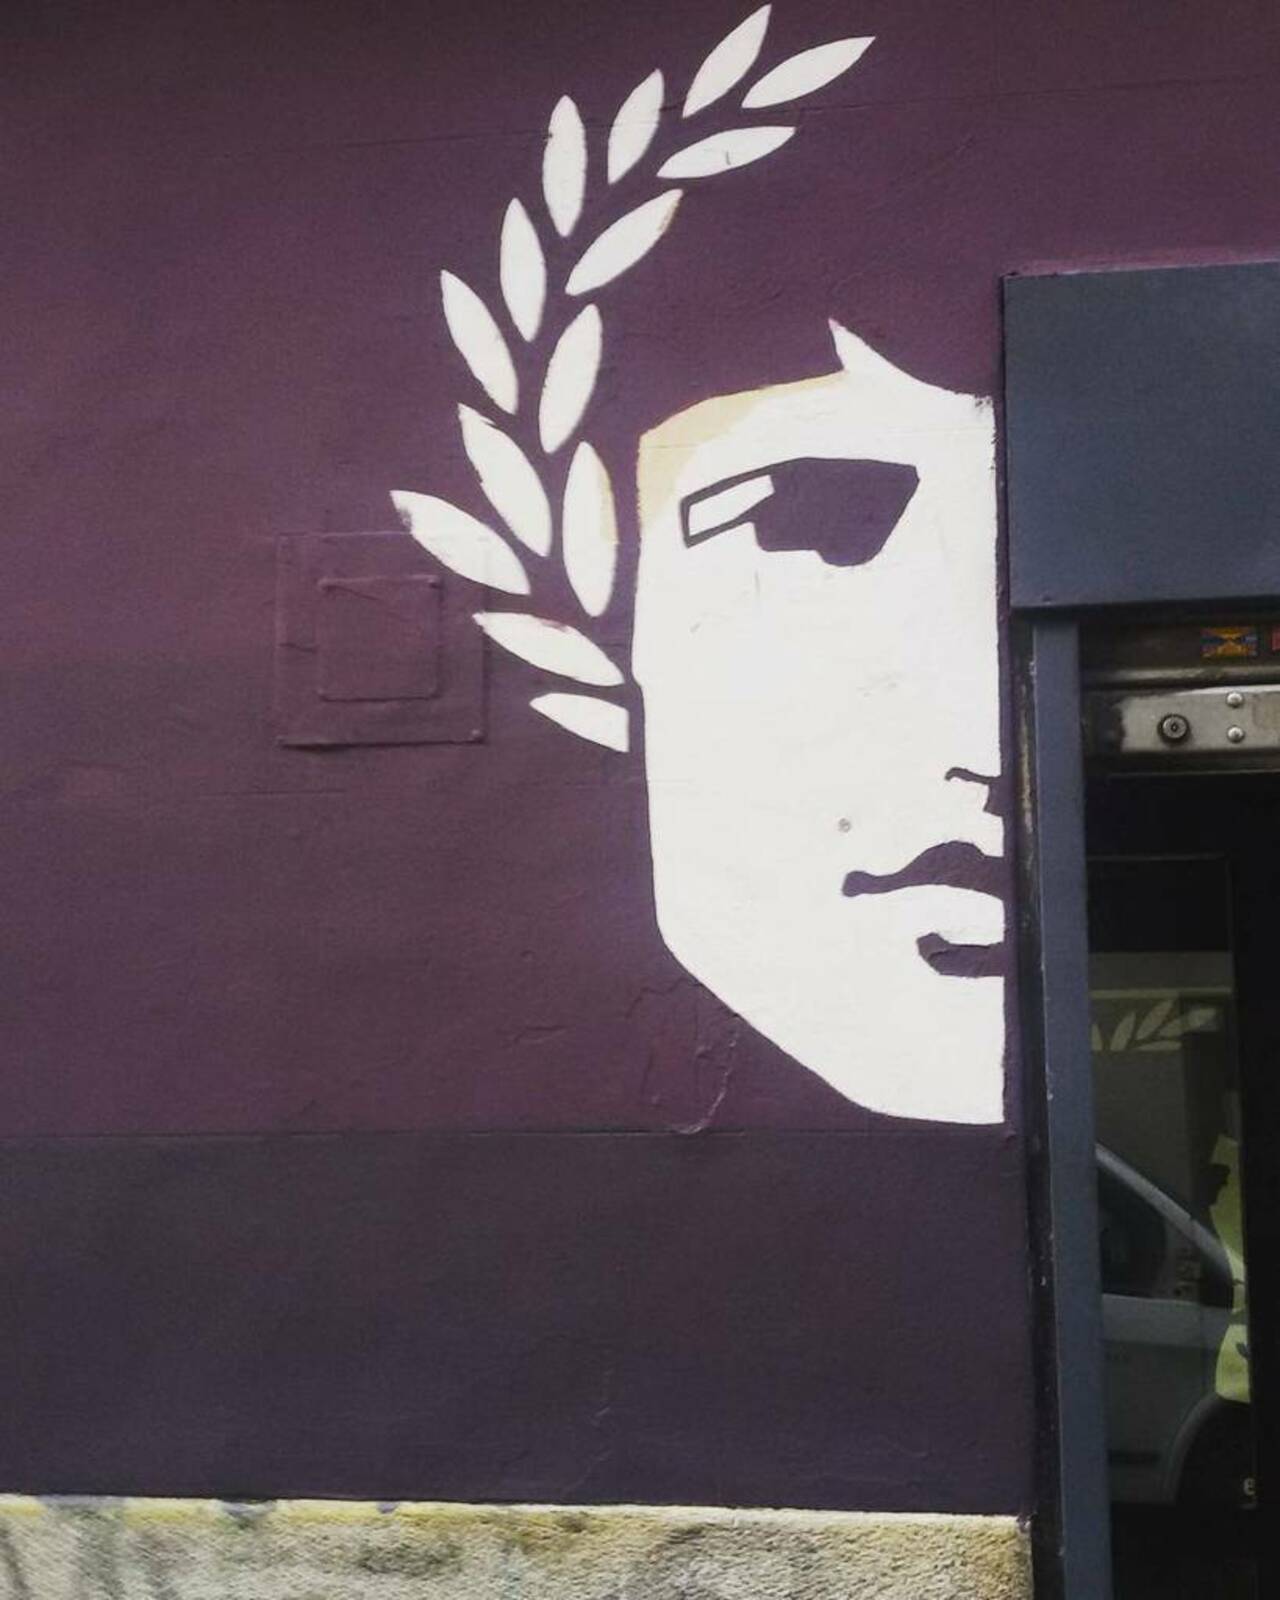 RT @CondeDuqueGente: #condeduque #madrid Art looking at you.. #streetphotography
#streetart #graffiti #arteenla… http://bit.ly/1LbsH5G http://t.co/bnK1z0AsKU